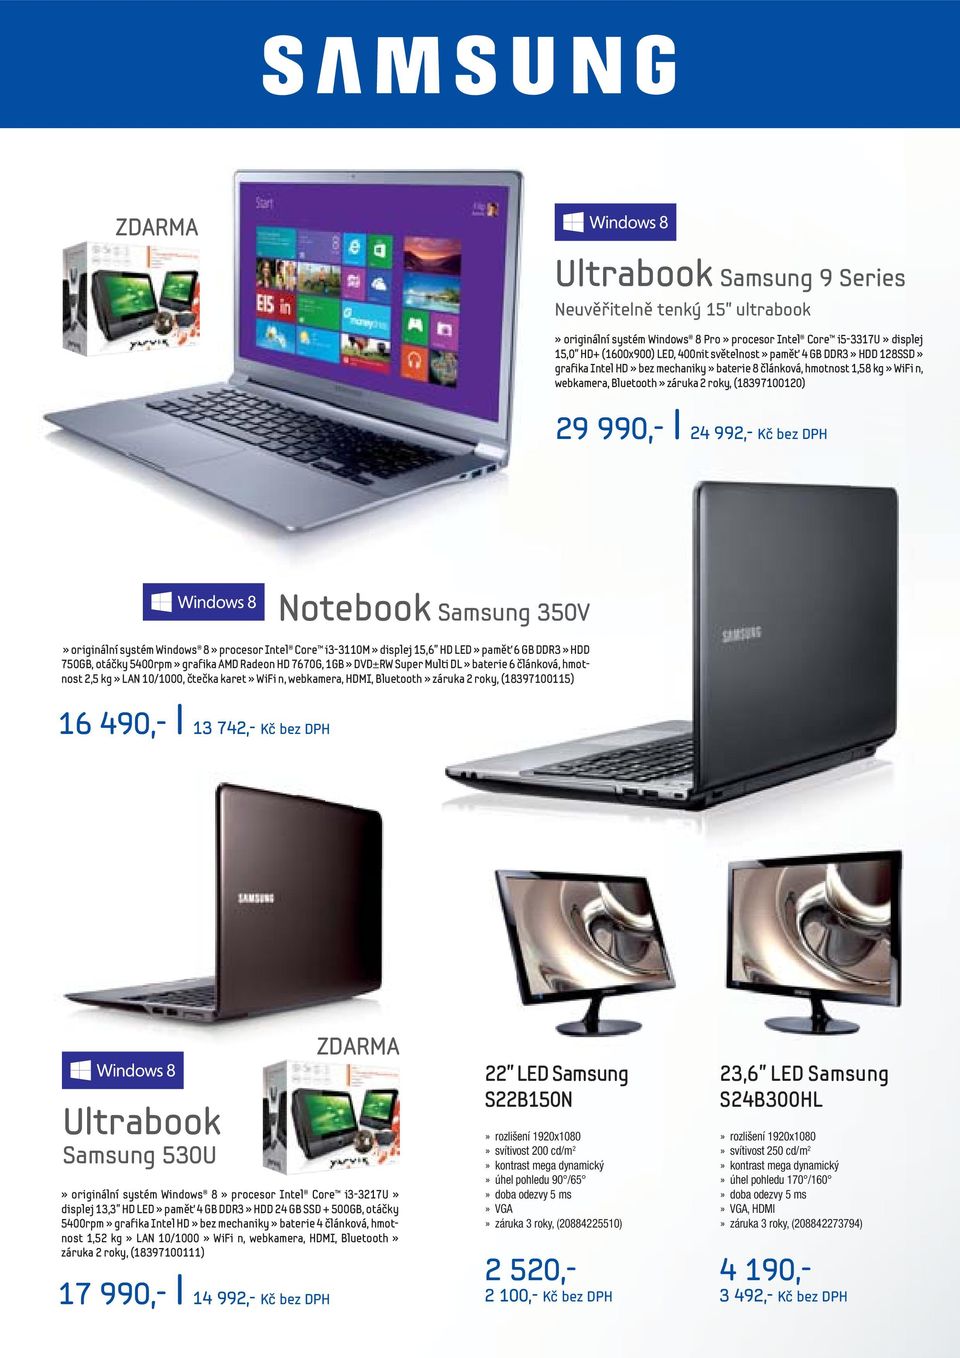 DPH Notebook Samsung 350V» originální systém Windows 8» procesor Intel Core i3-3110m» displej 15,6 HD LED» paměť 6 GB DDR3» HDD 750GB, otáčky 5400rpm» grafika AMD Radeon HD 7670G, 1GB» DVD±RW Super